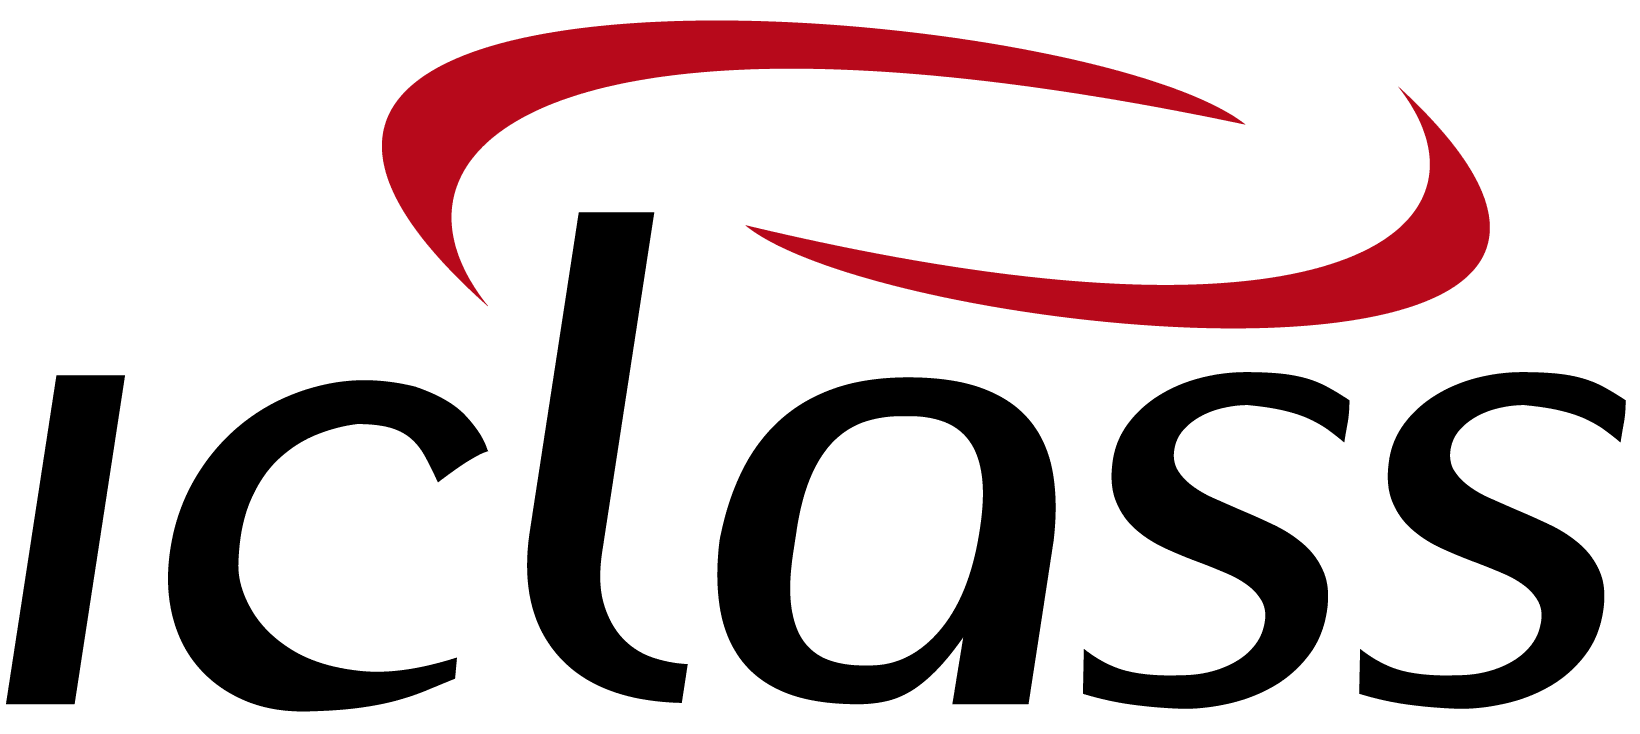 logo IClass Software de Ordem de Serviço Online Control de Plagas | IClass